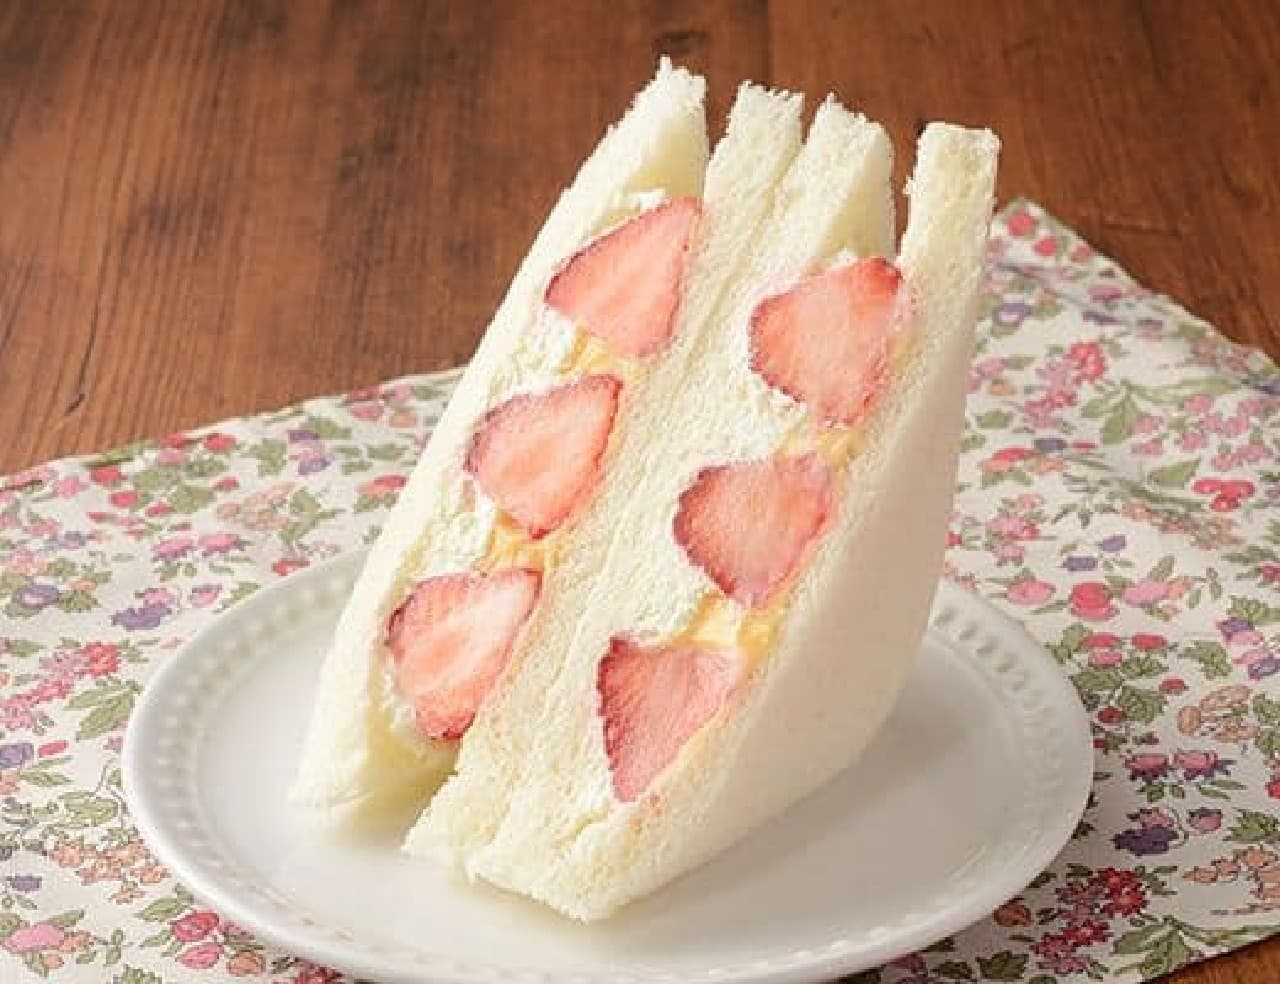 LAWSON "Small Happy Fruit Sandwich - Strawberry & Custard Whip